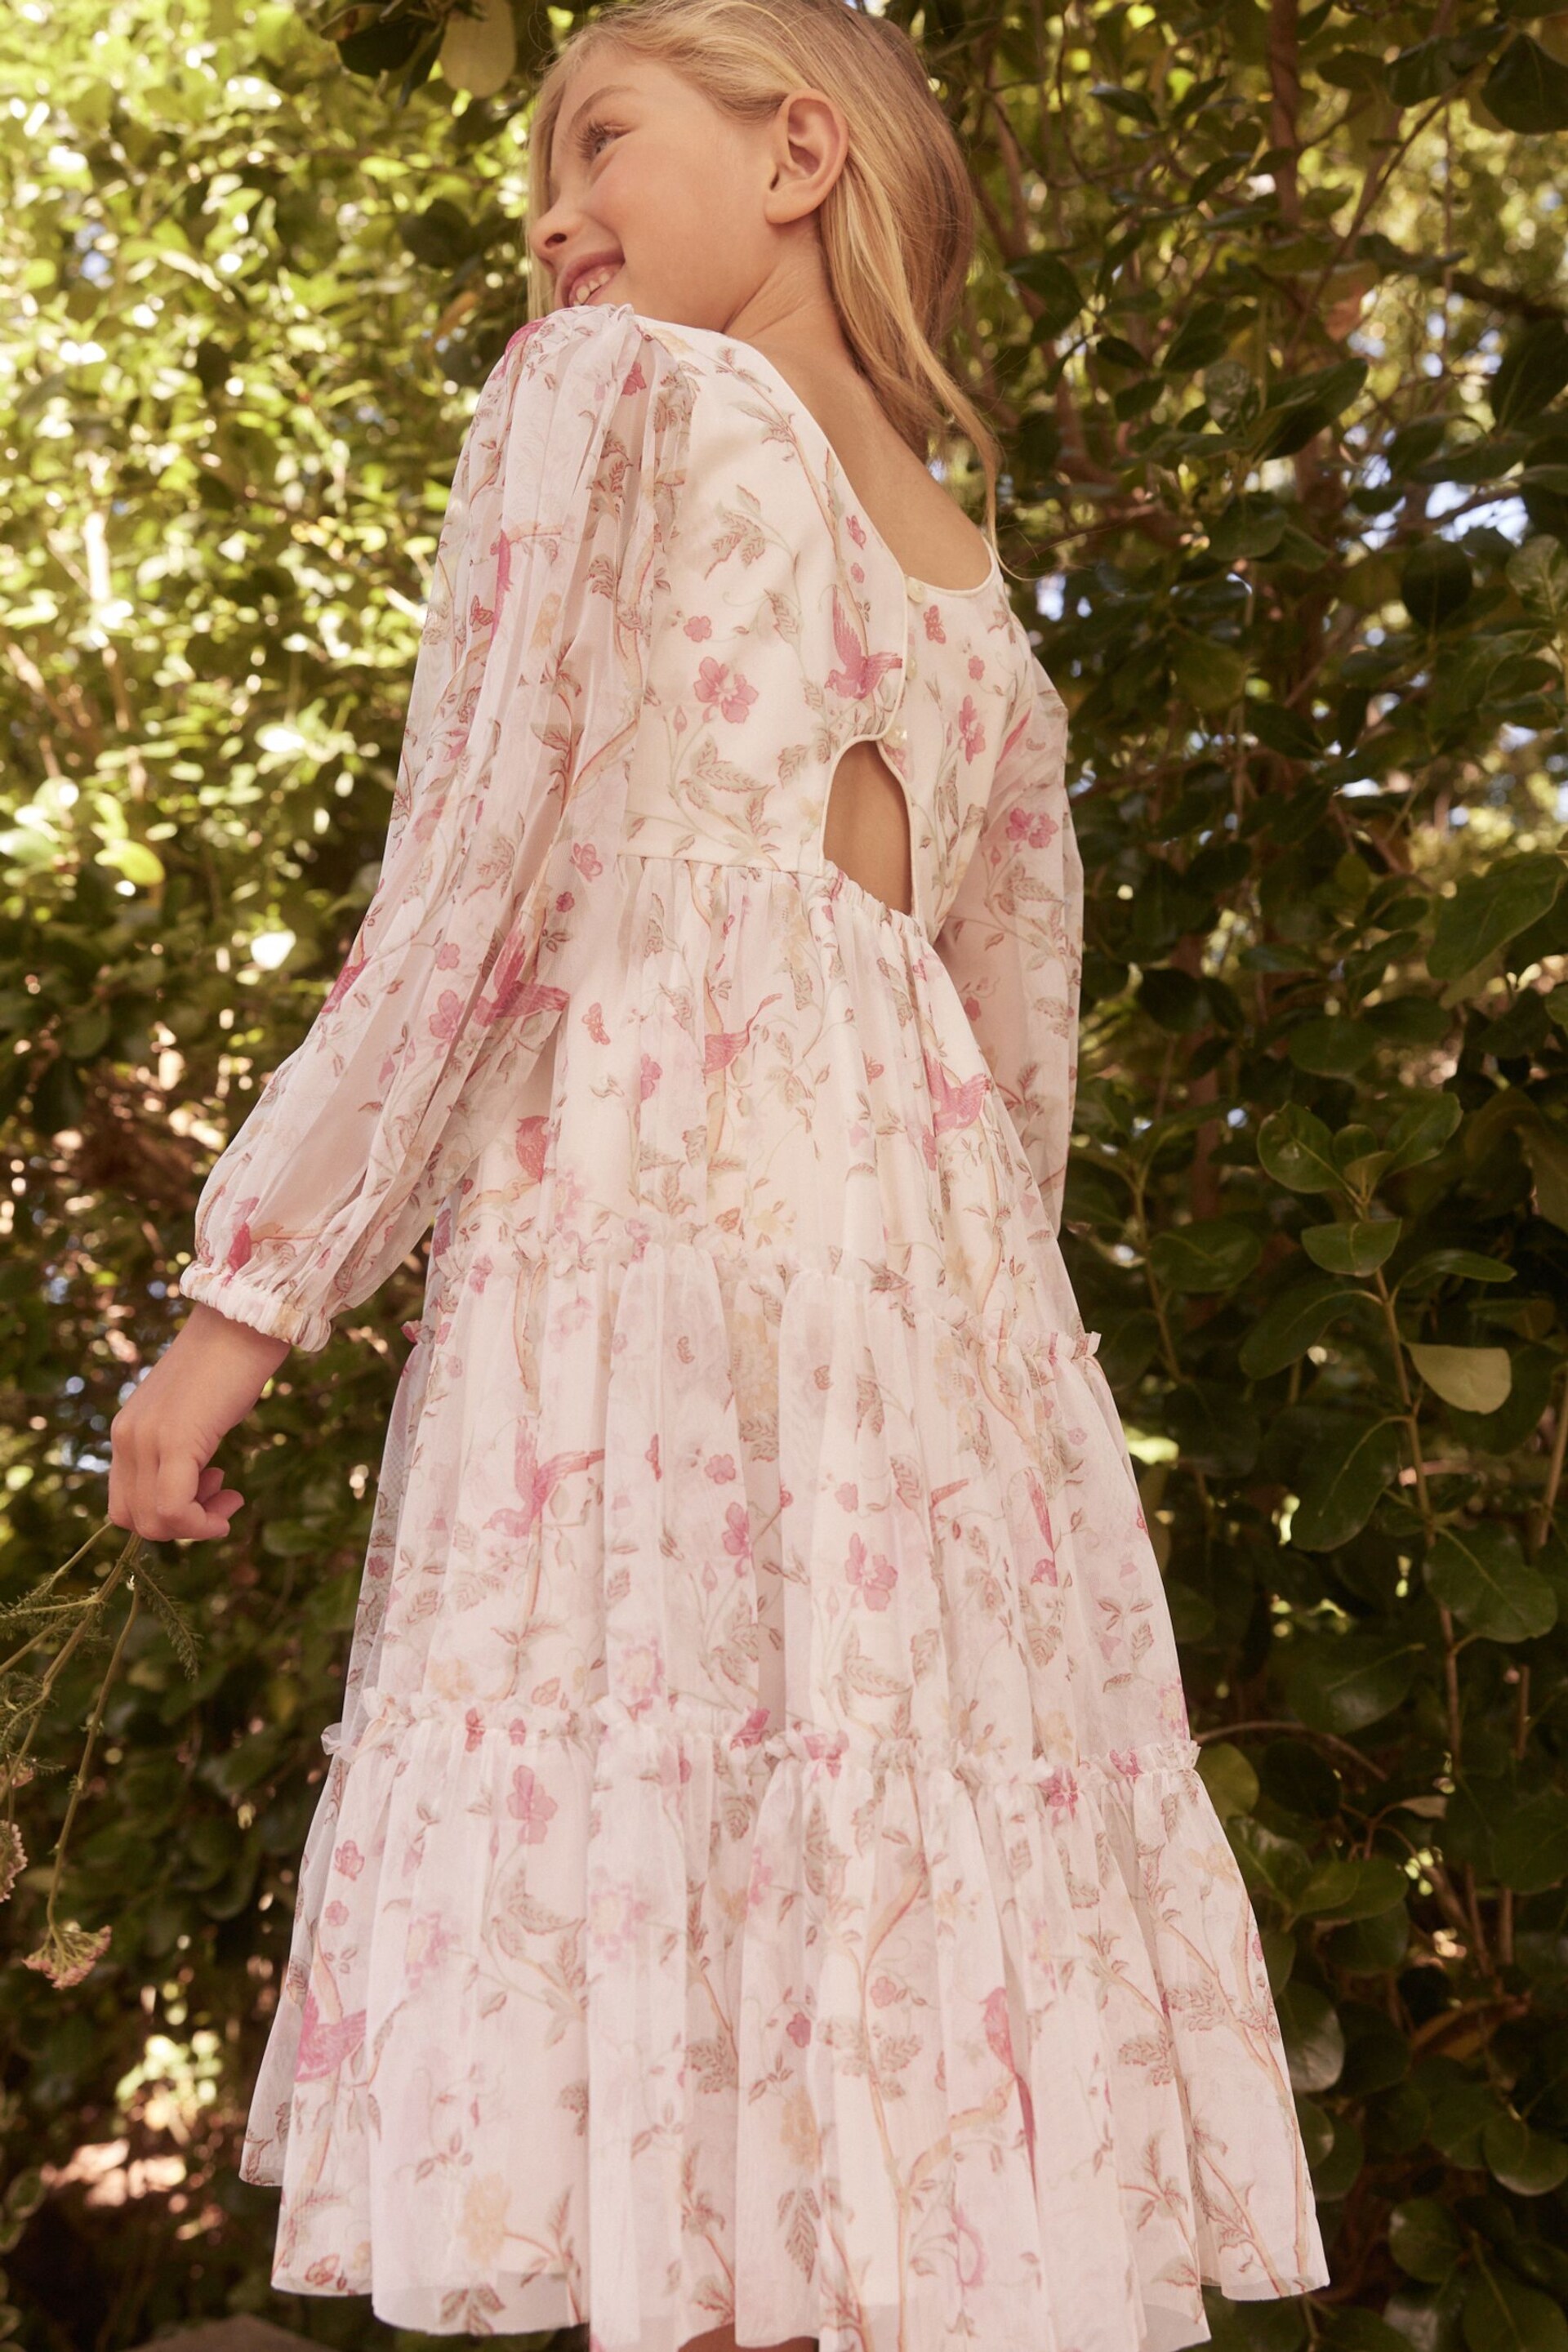 Laura Ashley White/Pink Long Sleeve Frill Mesh Dress - Image 4 of 8